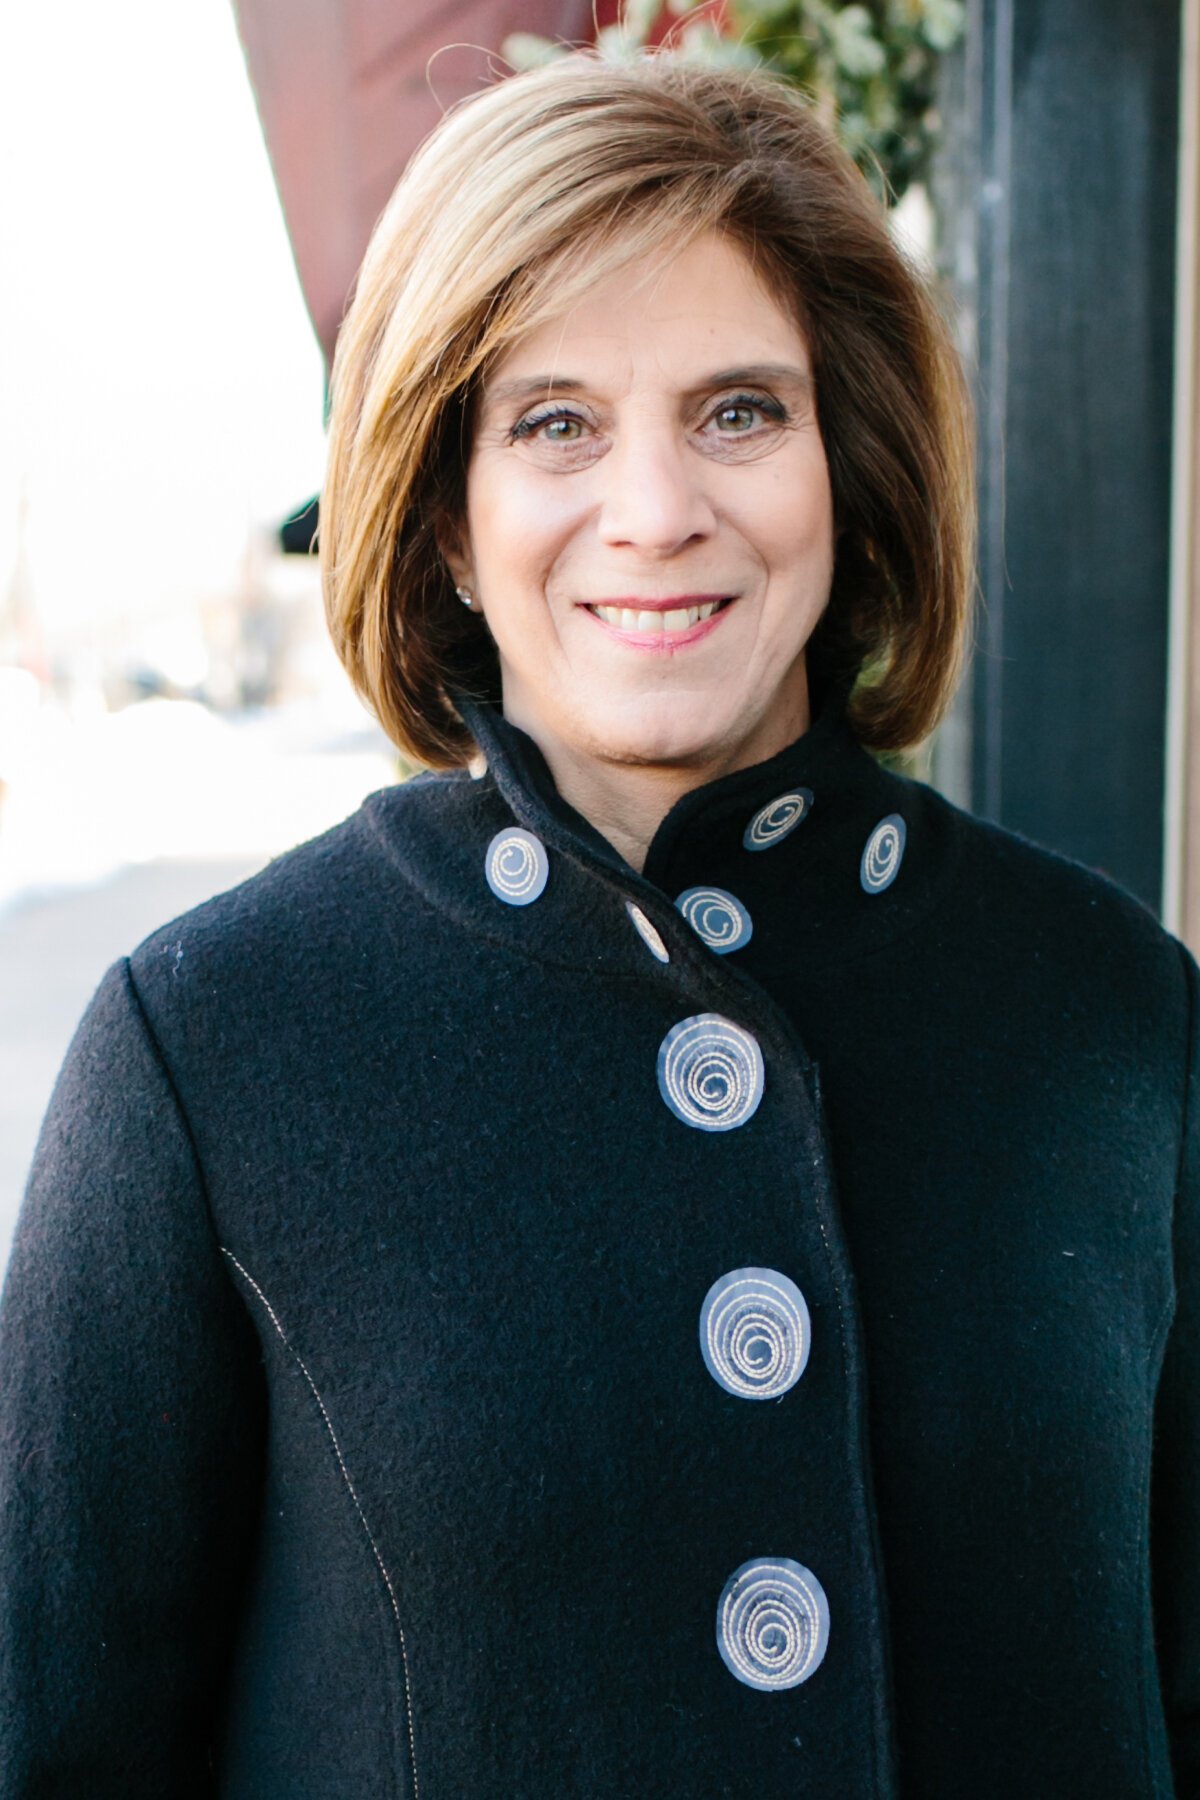 Judy Welch, Executive Director West Michigan of Michigan Women Forward